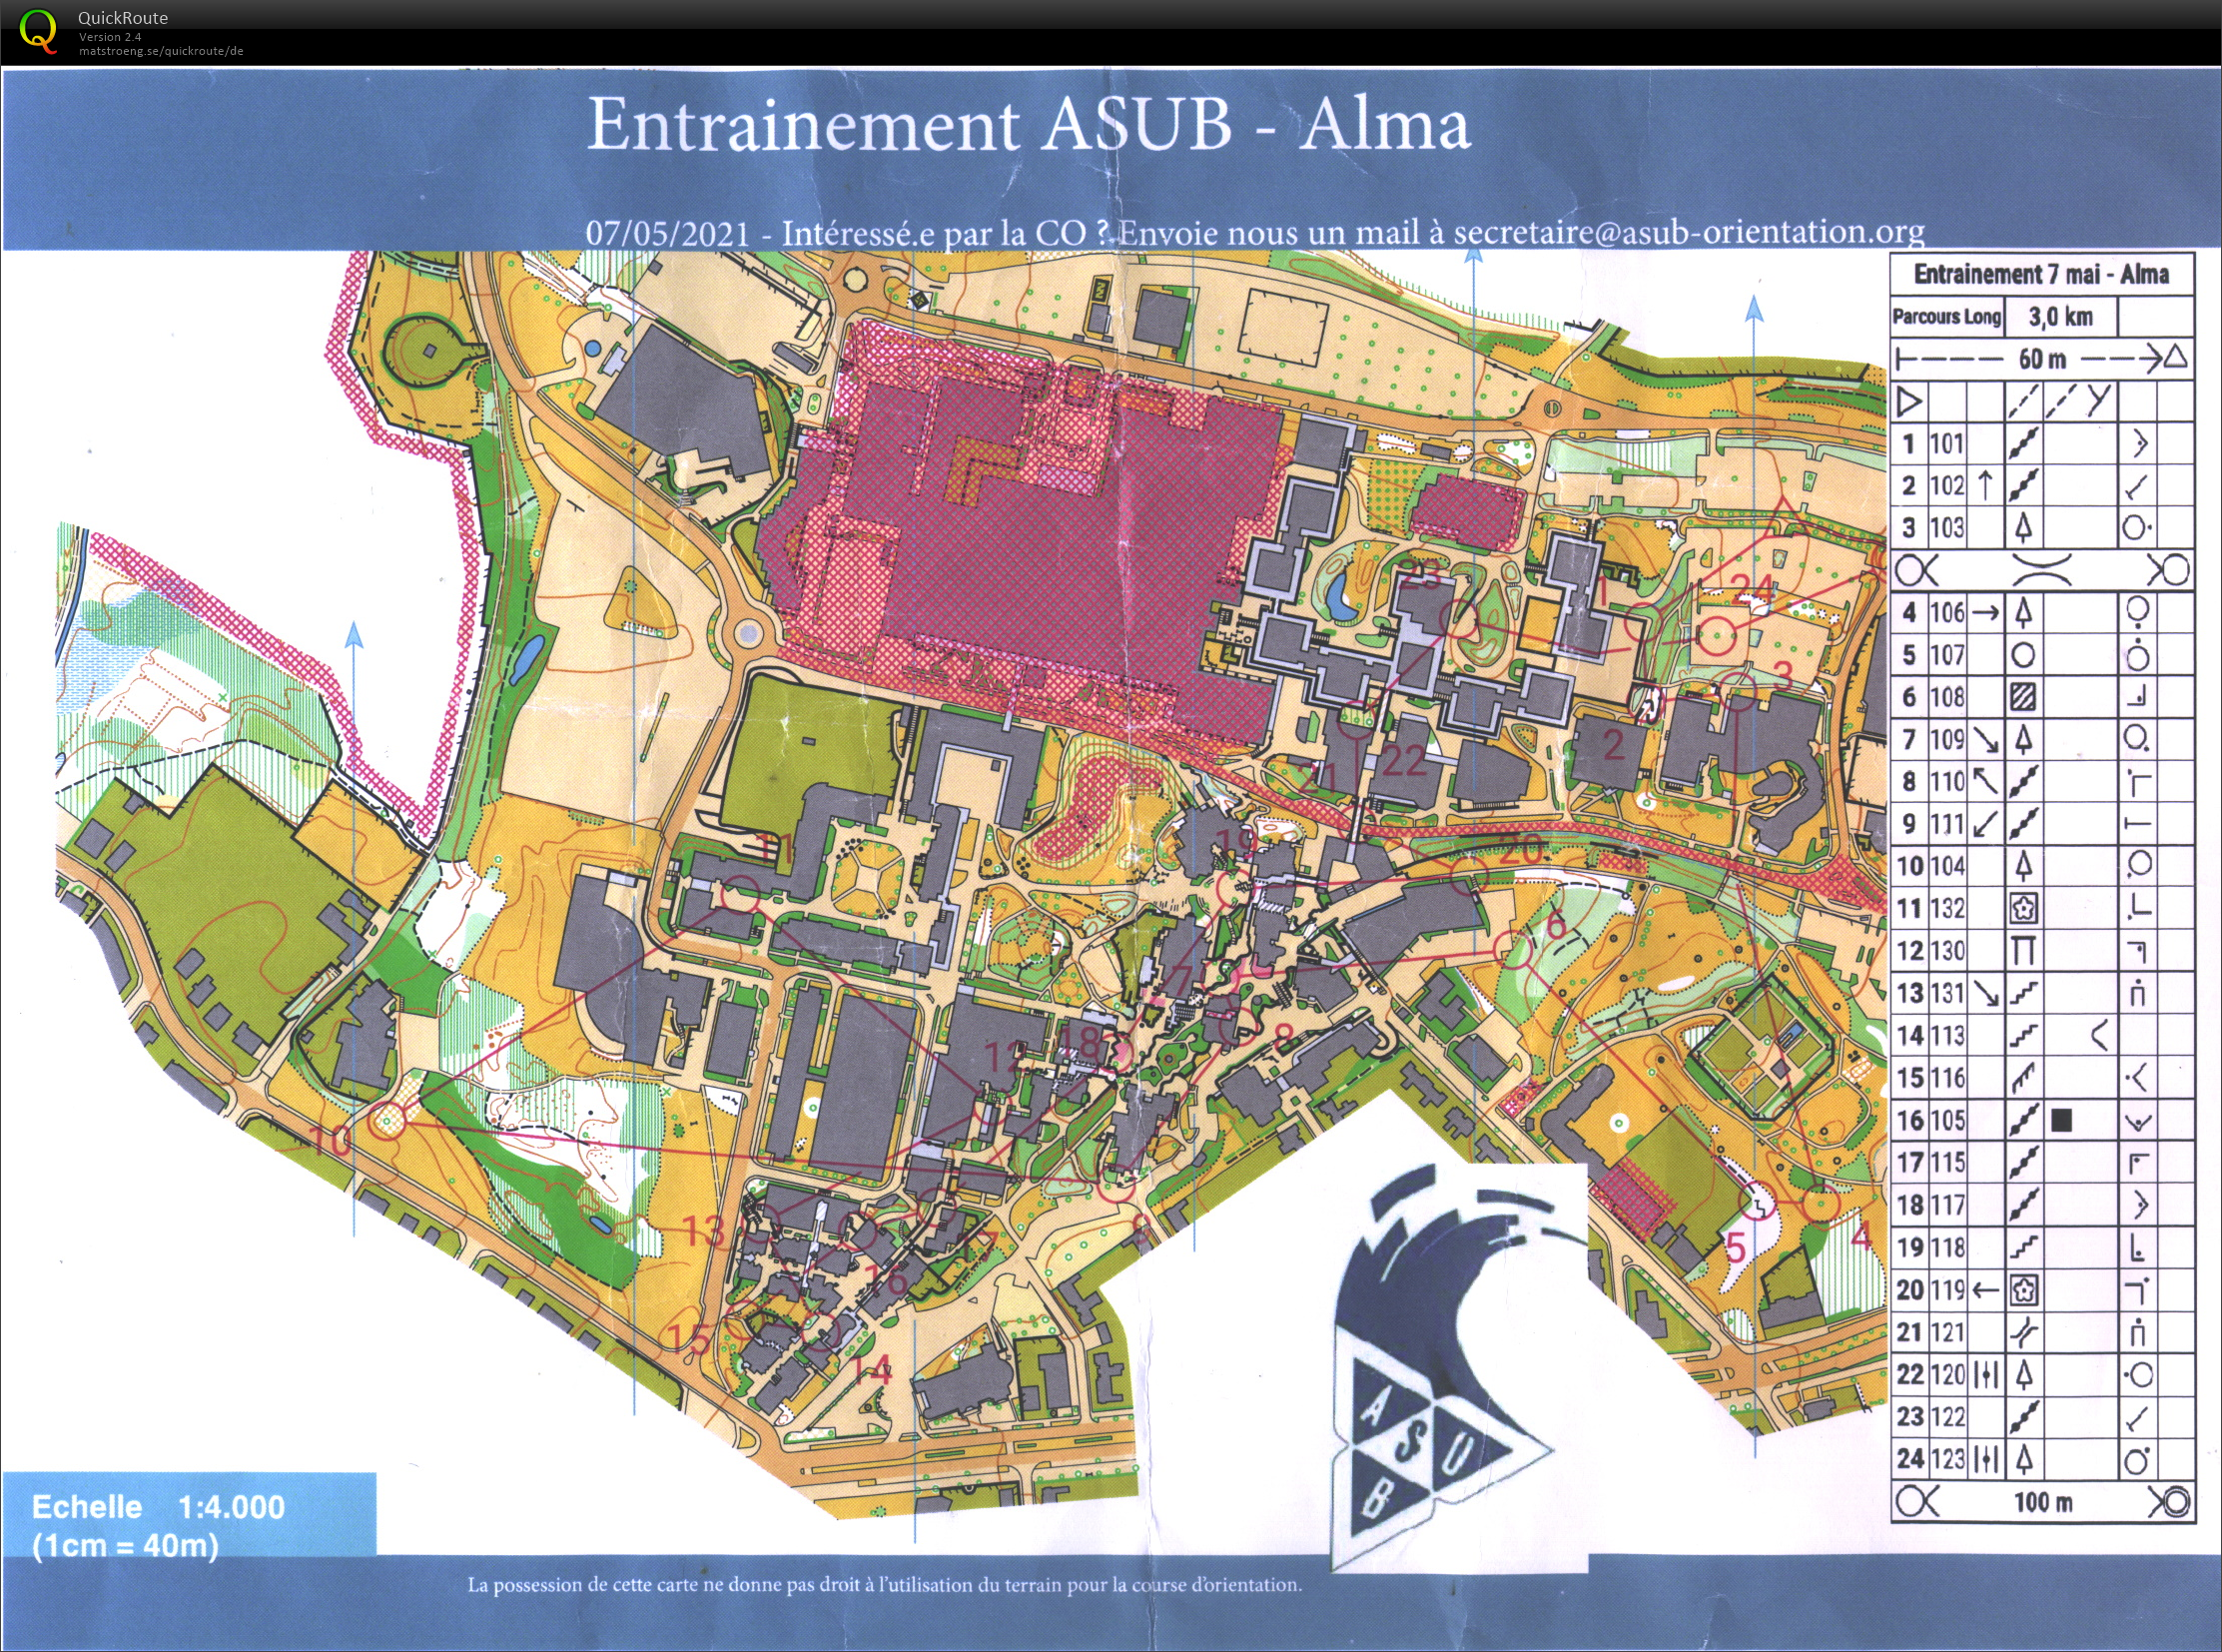 Entrainement ASUB - Alma (07/05/2021)